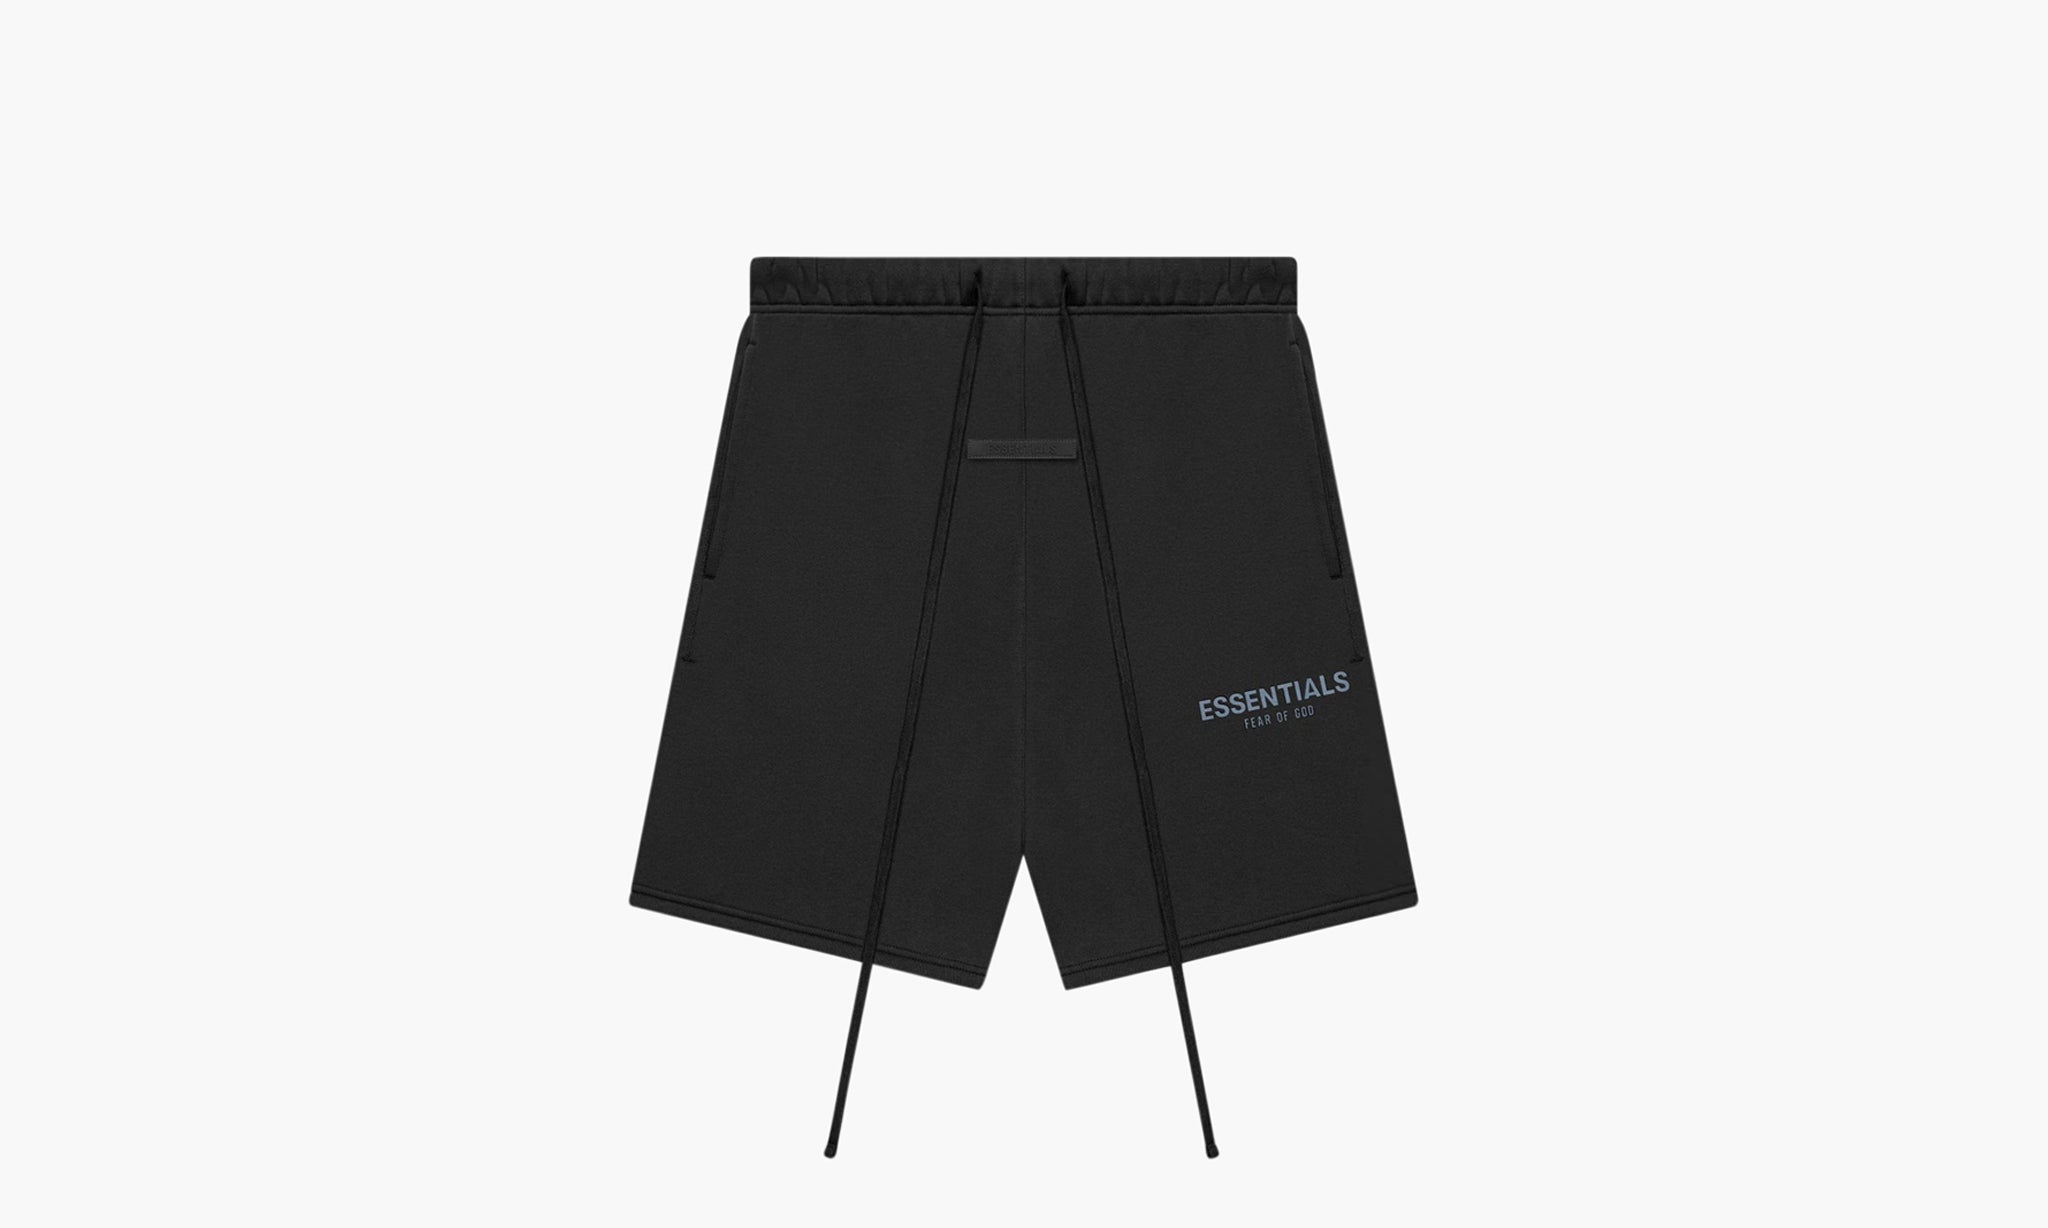 Essentials Shorts Black